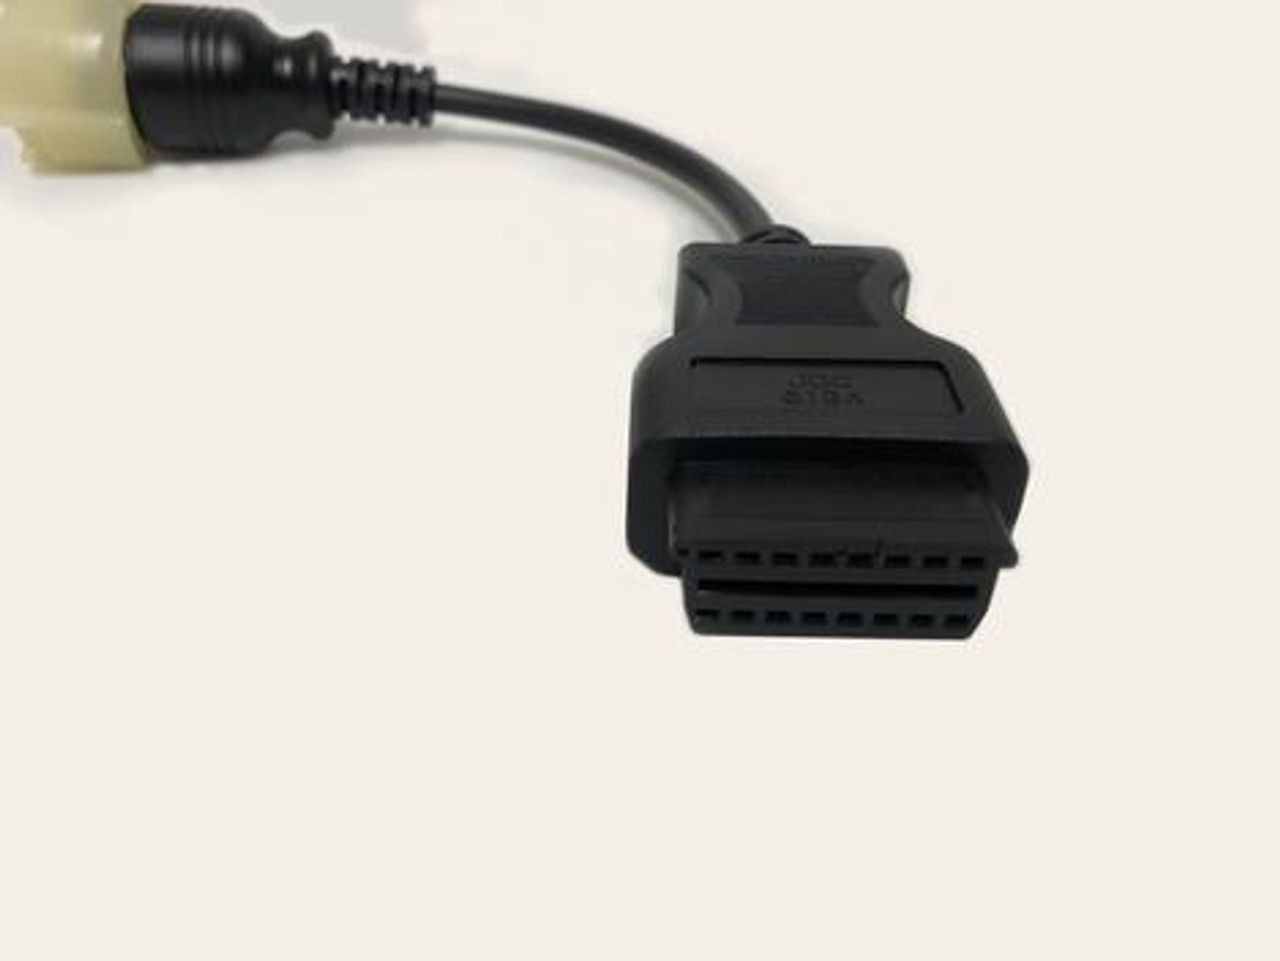 Jaltest Suzuki 8 pin diagnostics cable JDC613A